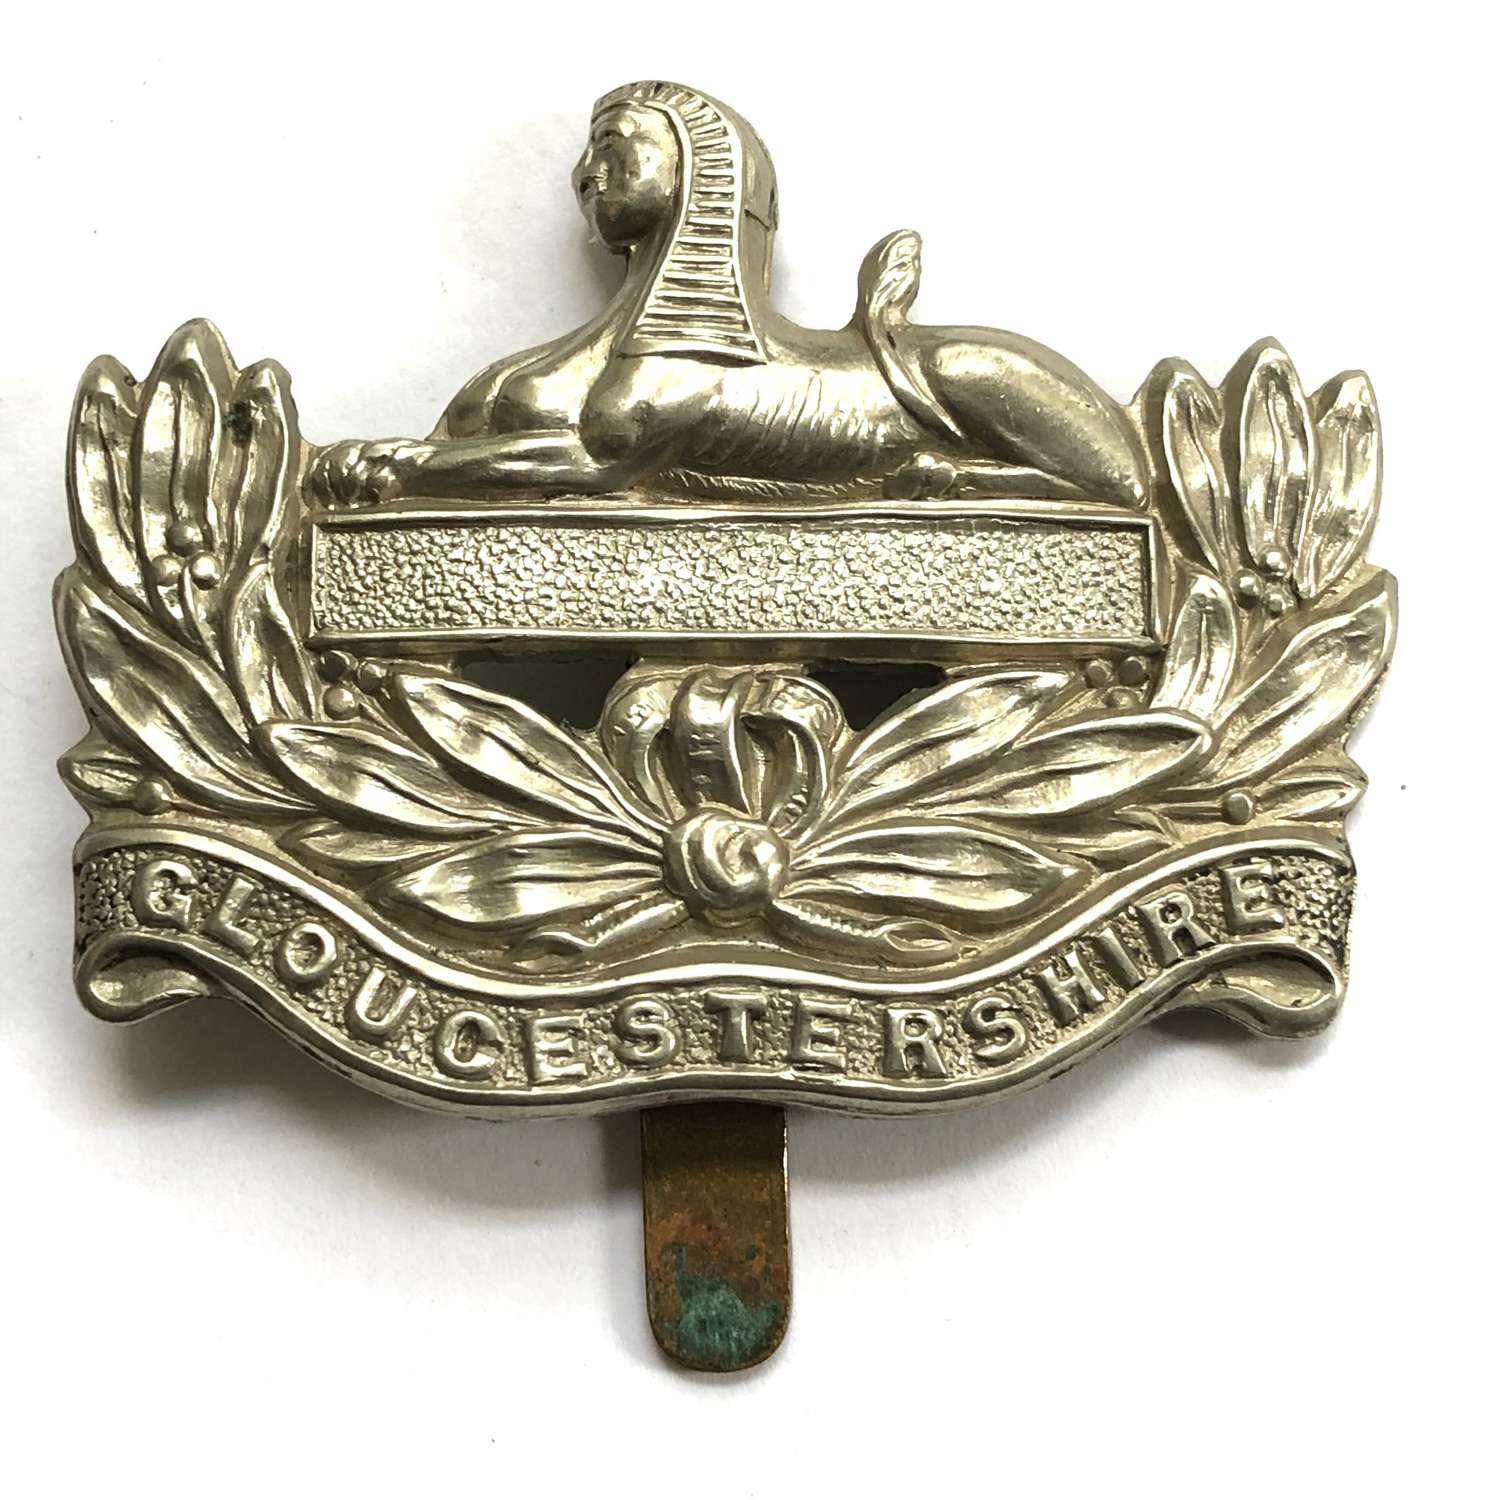 4th & 6th Bns. Gloucestershire Regiment post 1908 cap badge